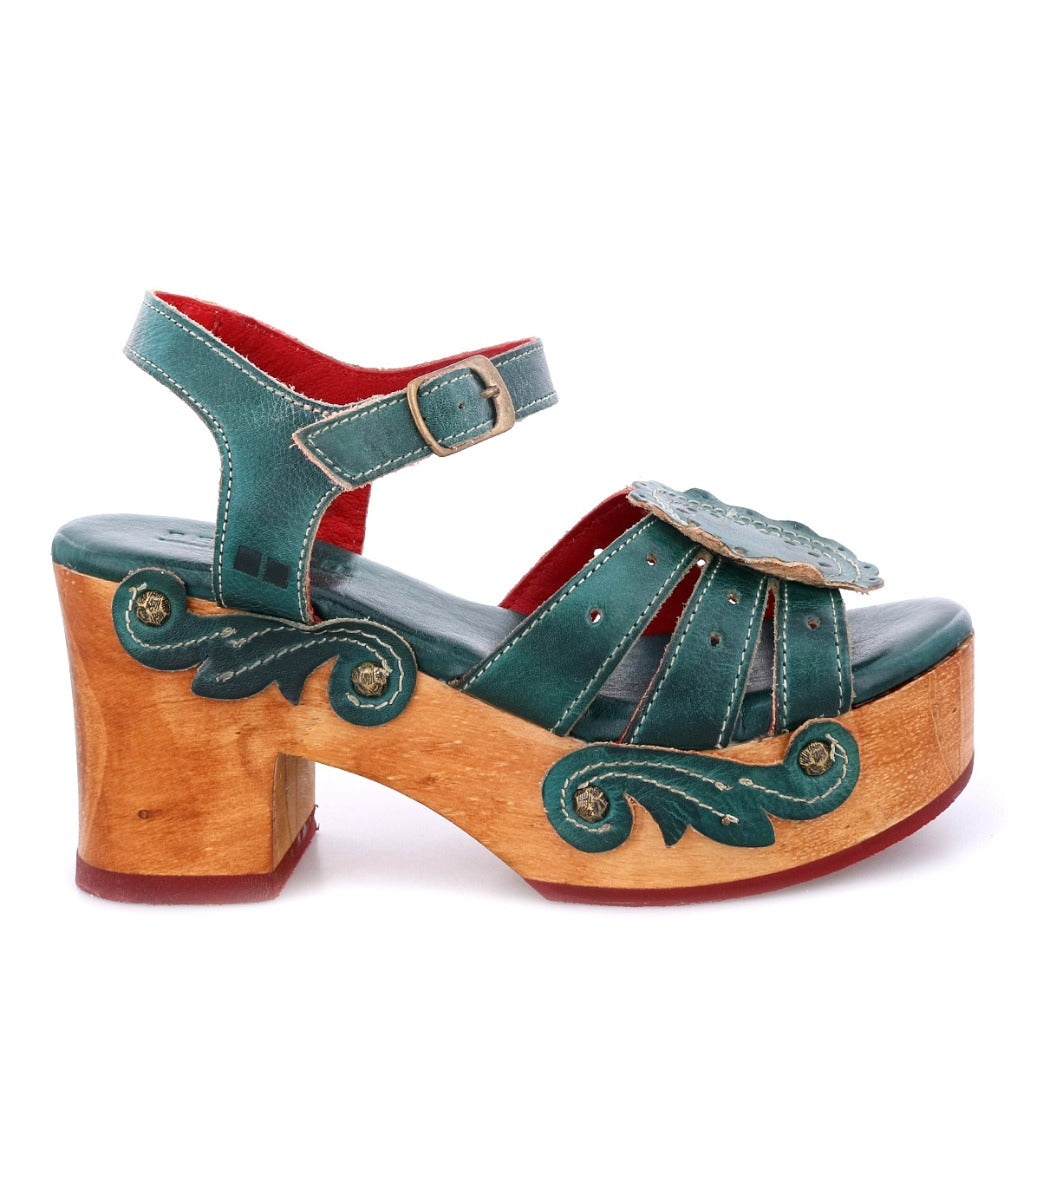 Dark teal Sabine sandals with a wooden platform, from the brand Bed Stu.